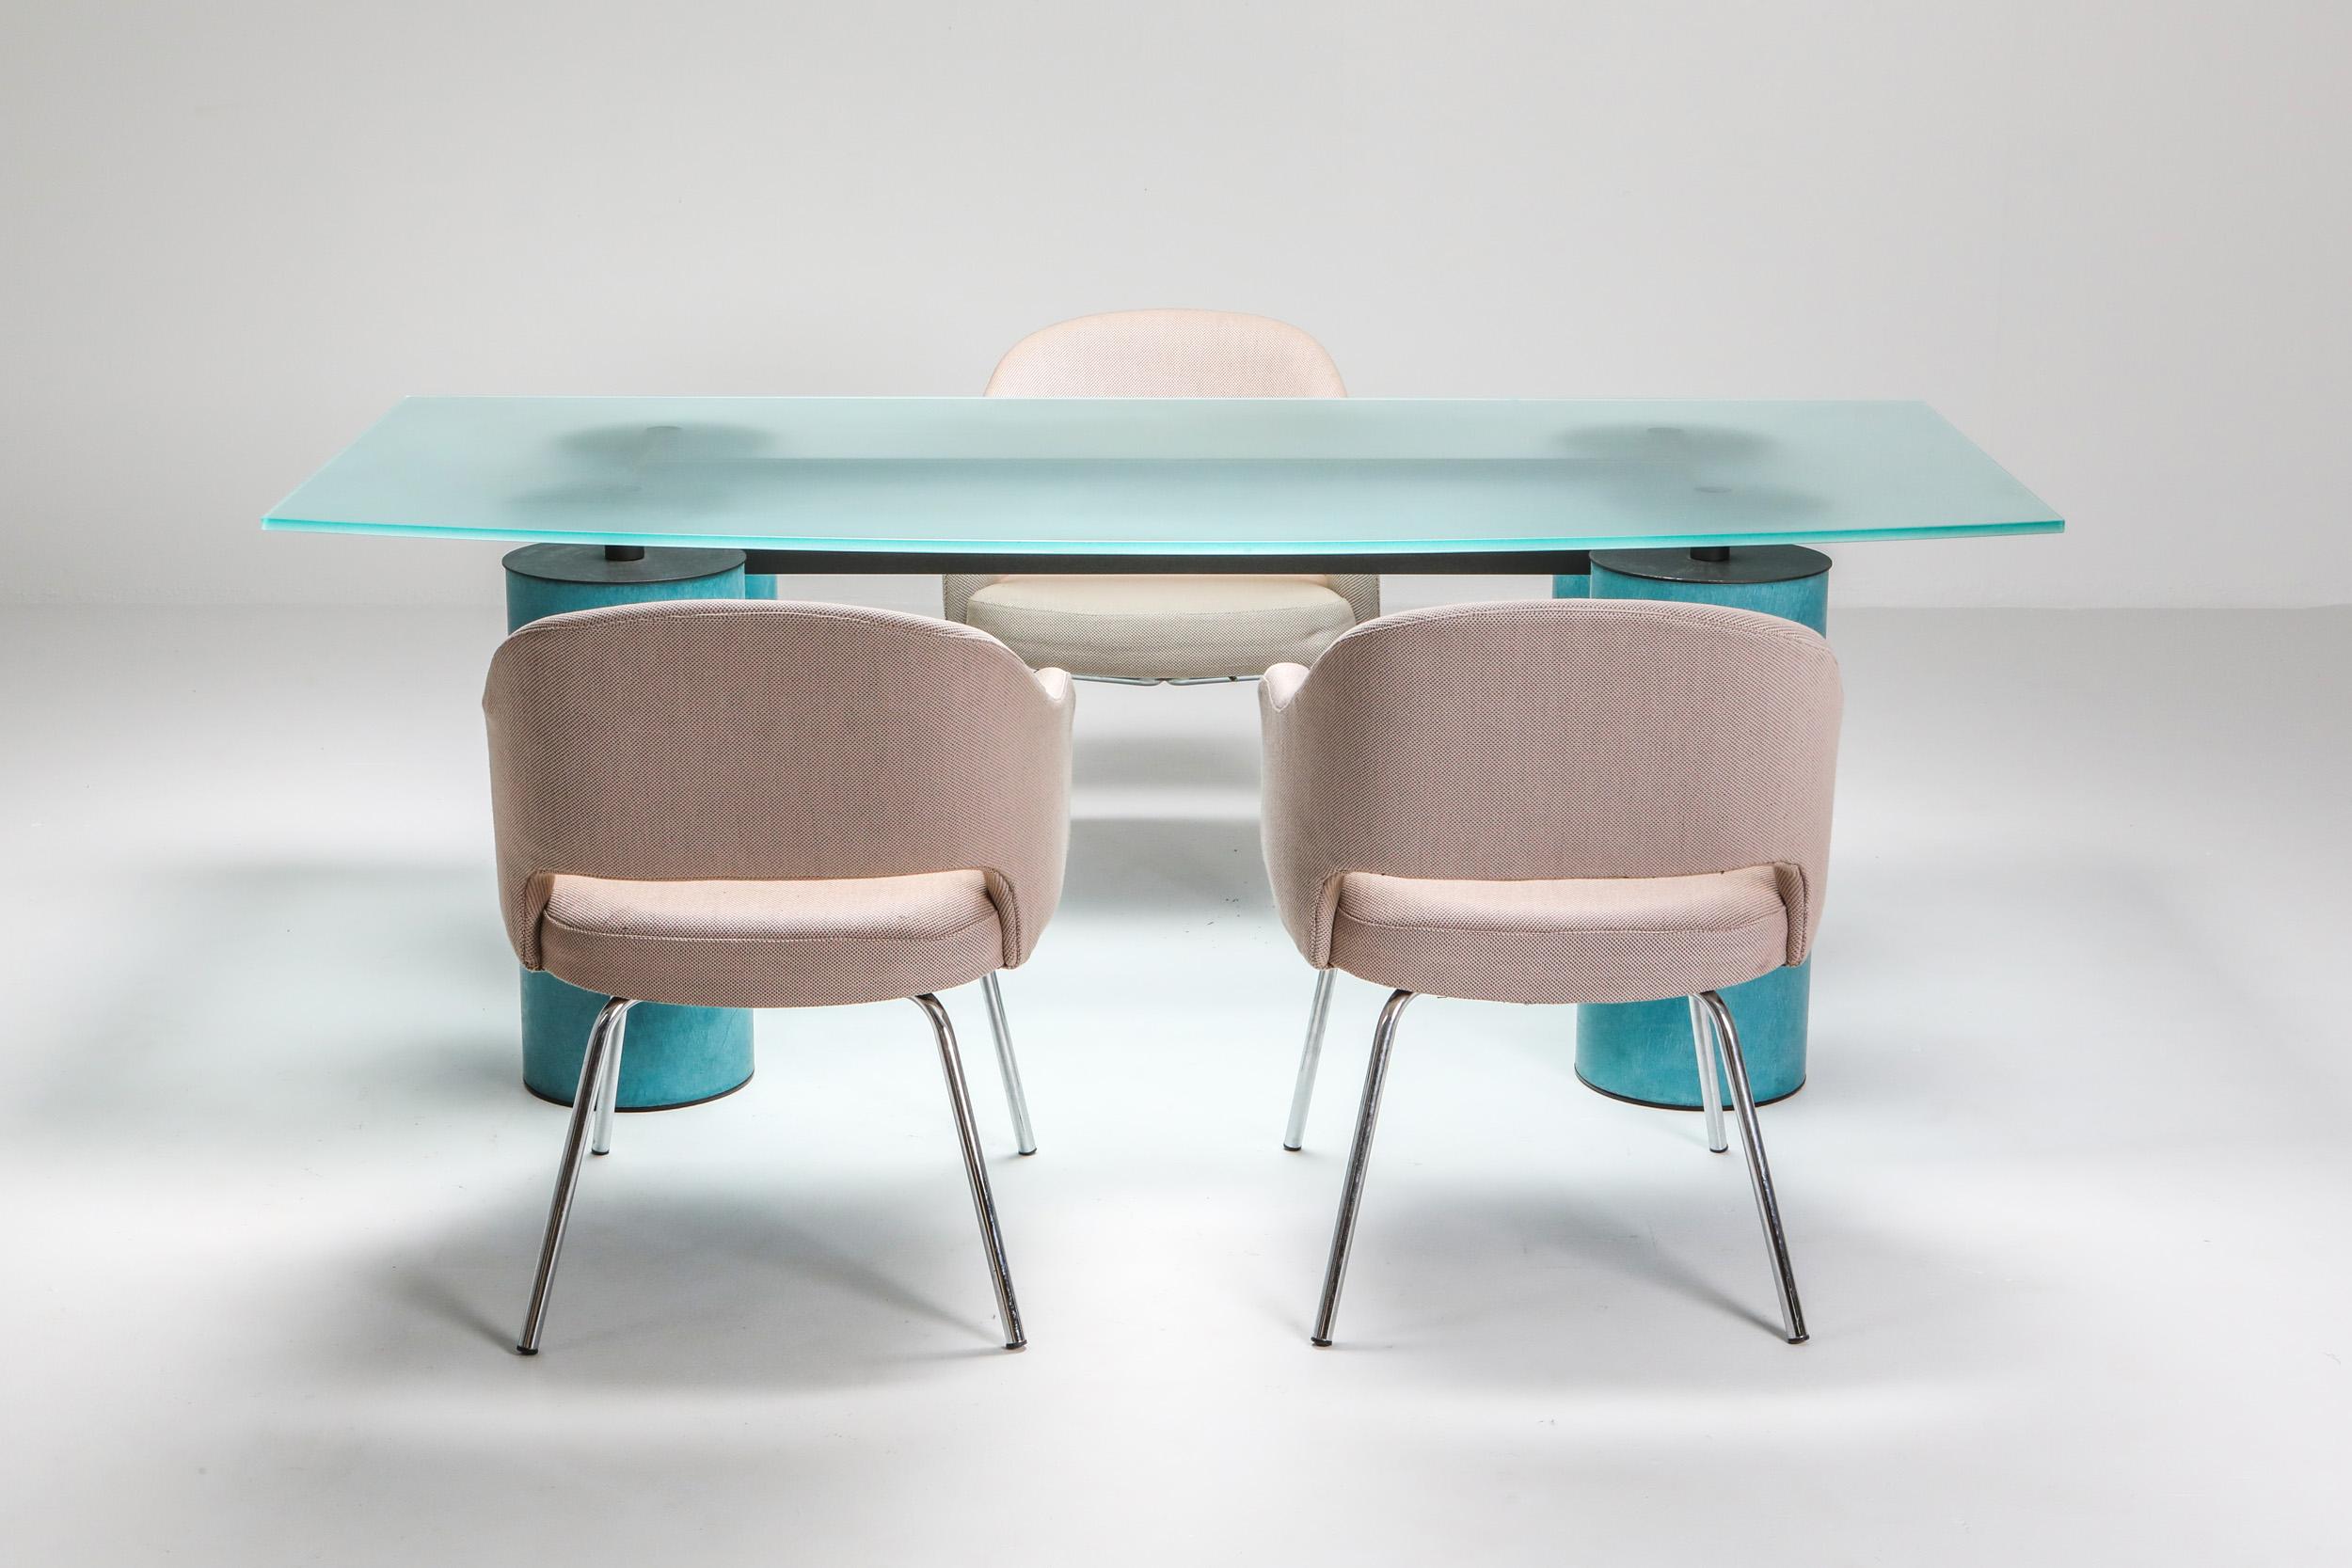 Steel Massimo Vignelli 'Serenissimo' Table Desk for Acerbis